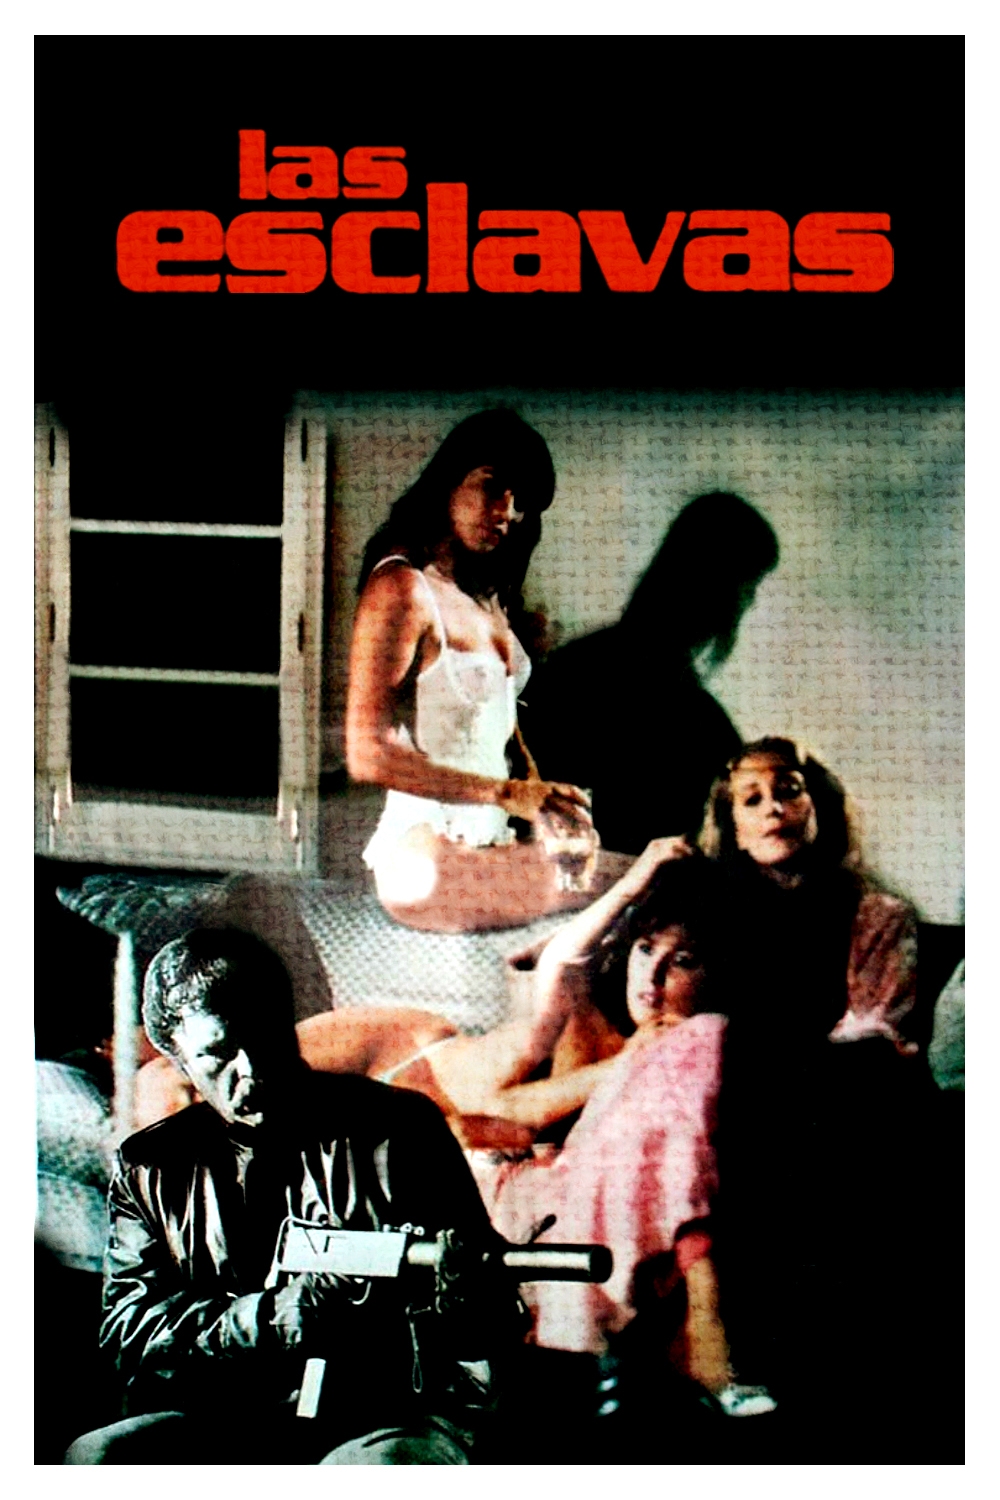 Las esclavas (1987) Screenshot 1 